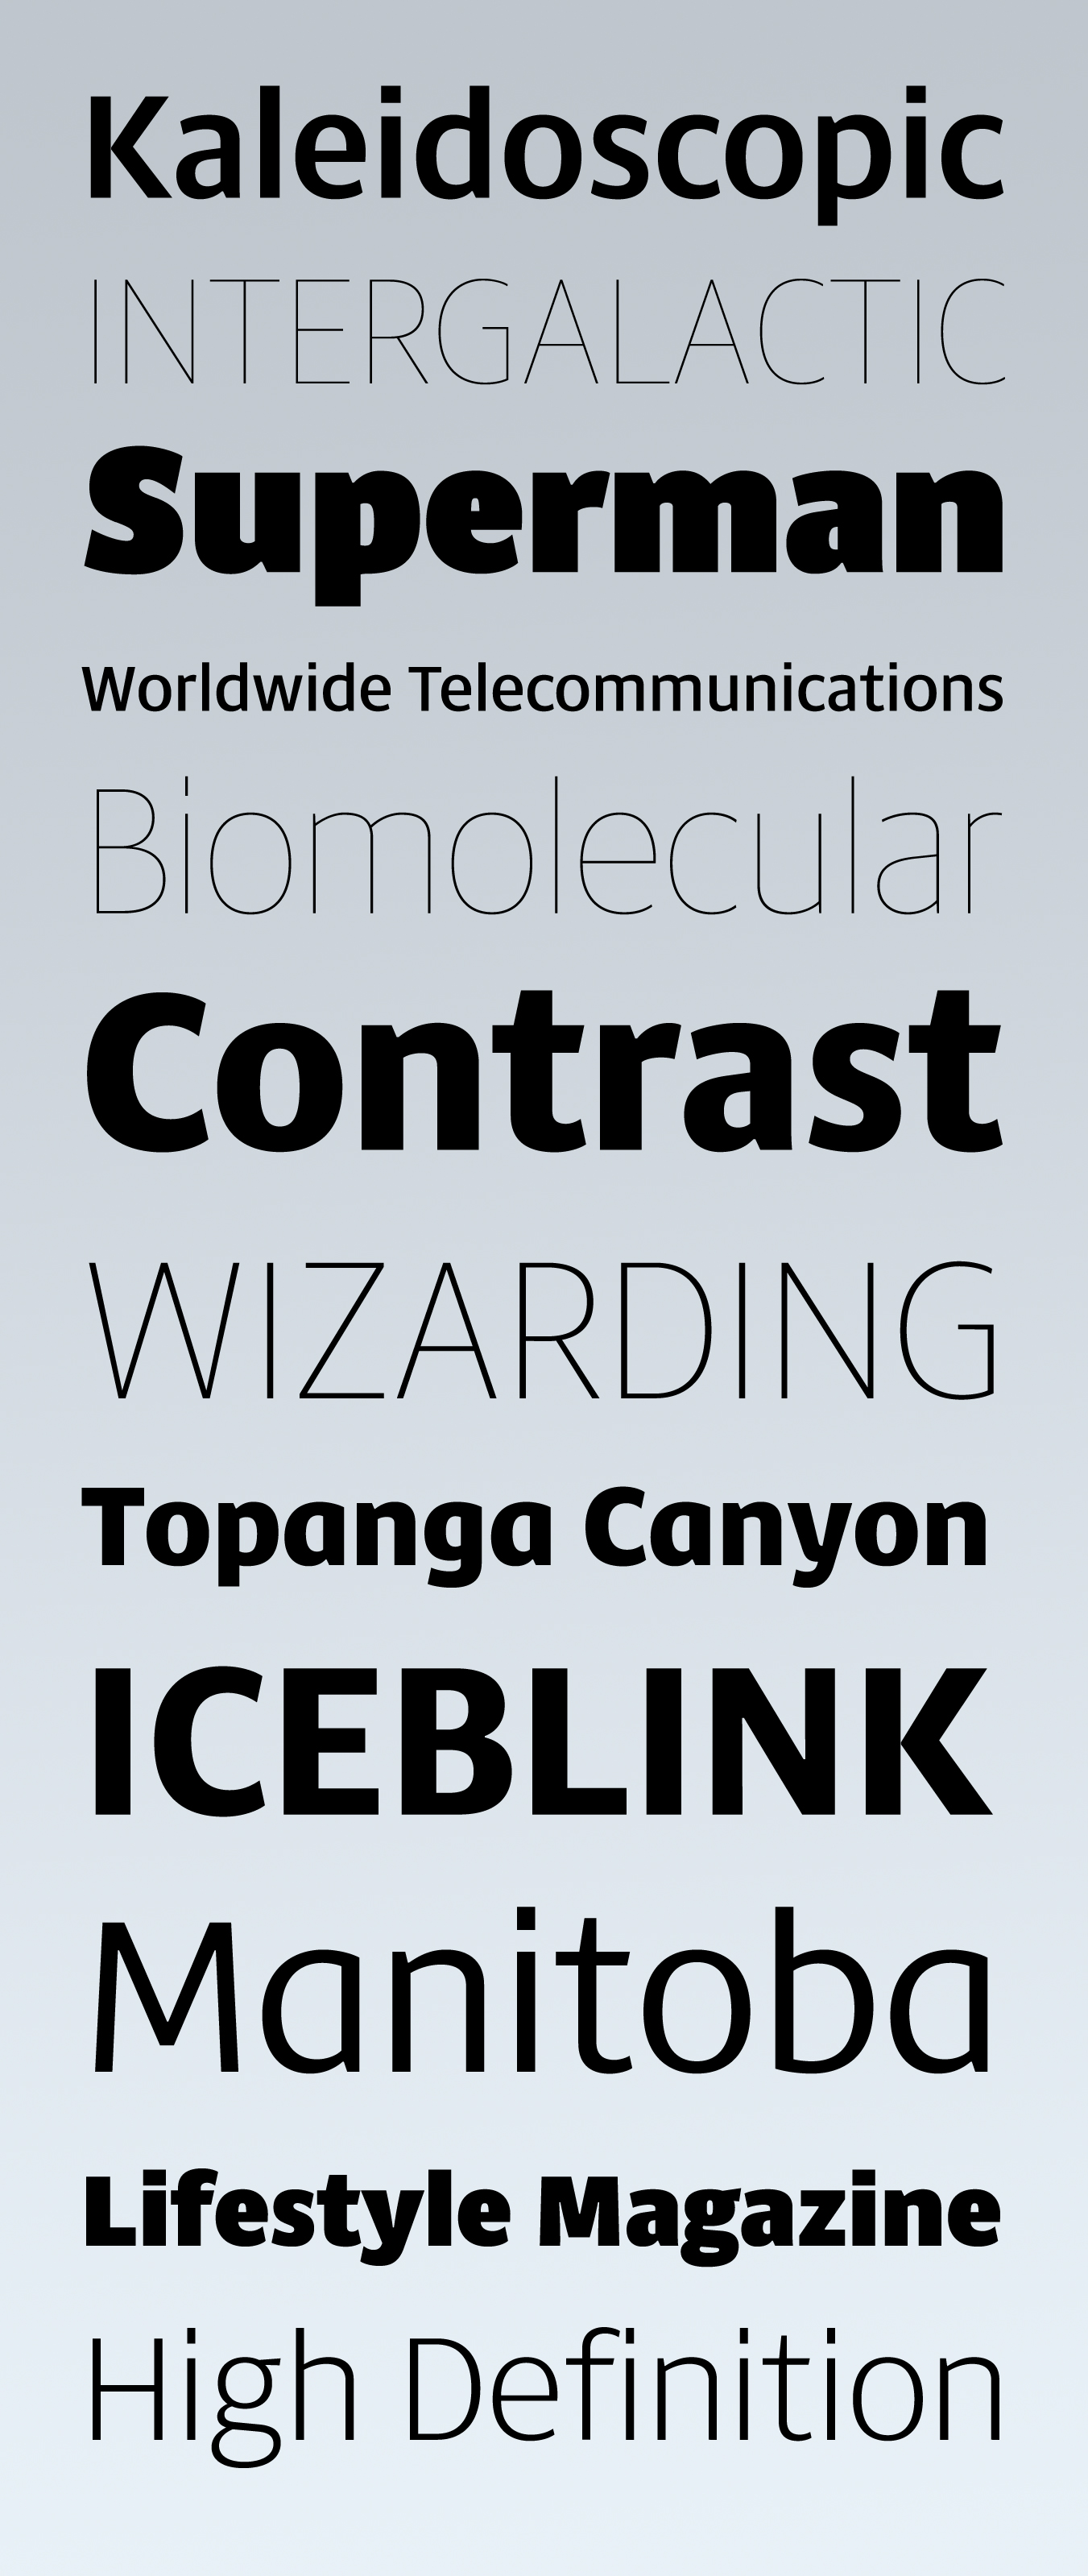 Gem typeface